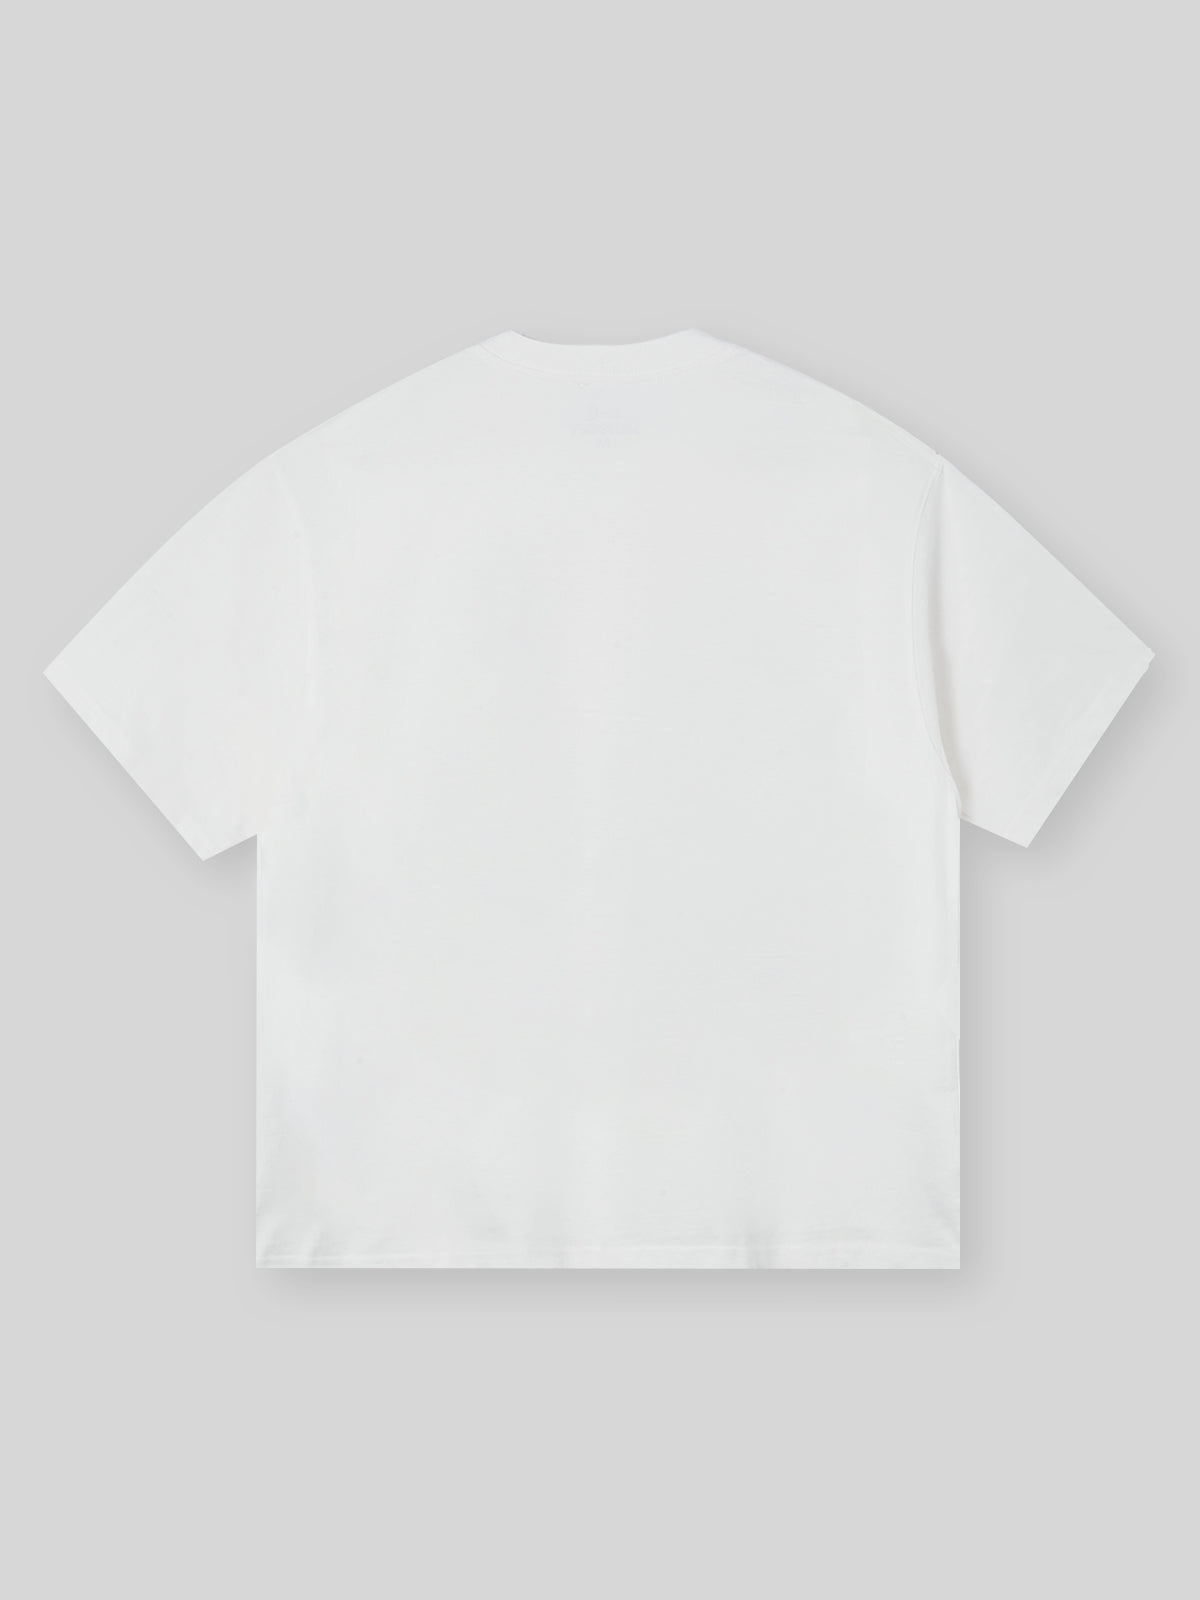 BOUNCE BACK© Prosperous Handprint T-shirt